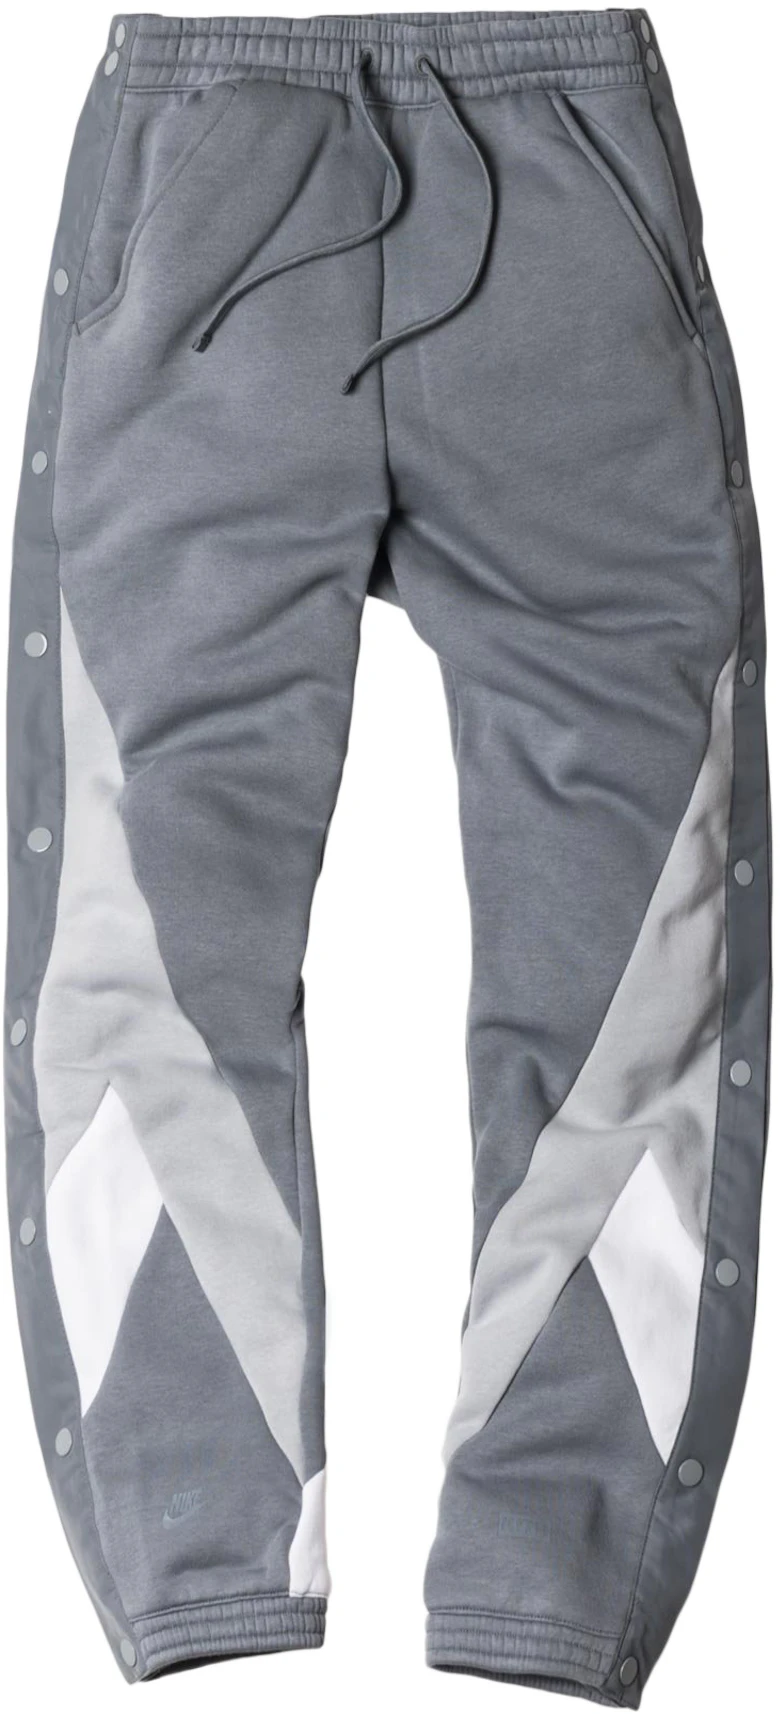 Kith Nike Tearaway Pant Grey - FW17 ES